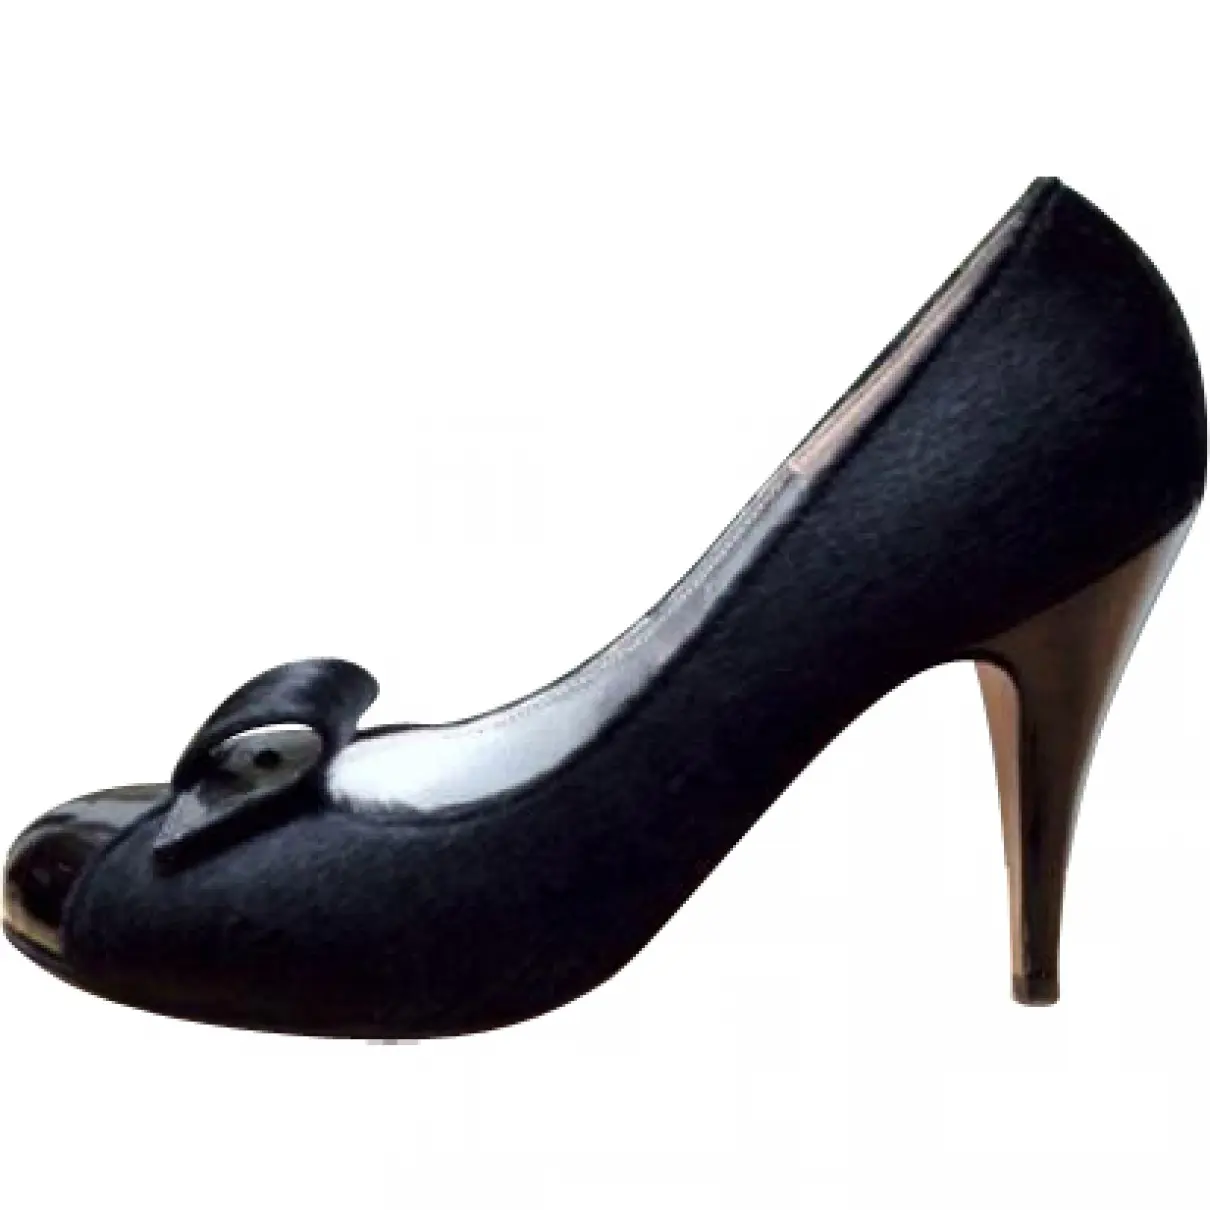 Black Patent leather Heels Olivia Morris Shoes